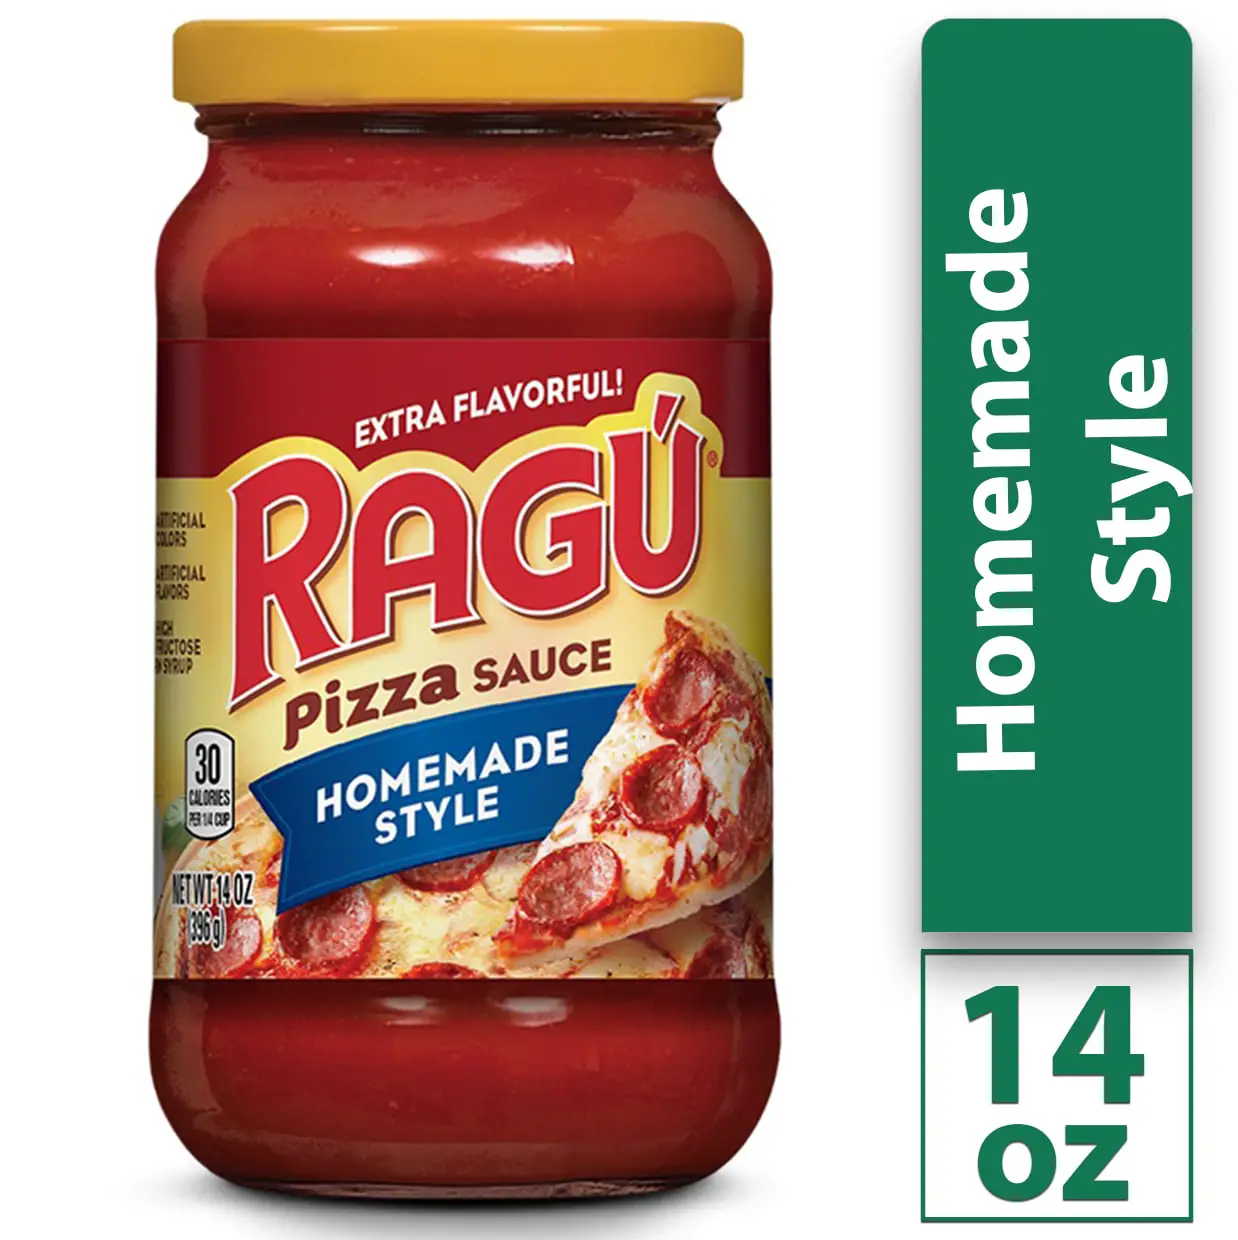 Ragú Homemade Style Pizza Sauce, 14 oz.